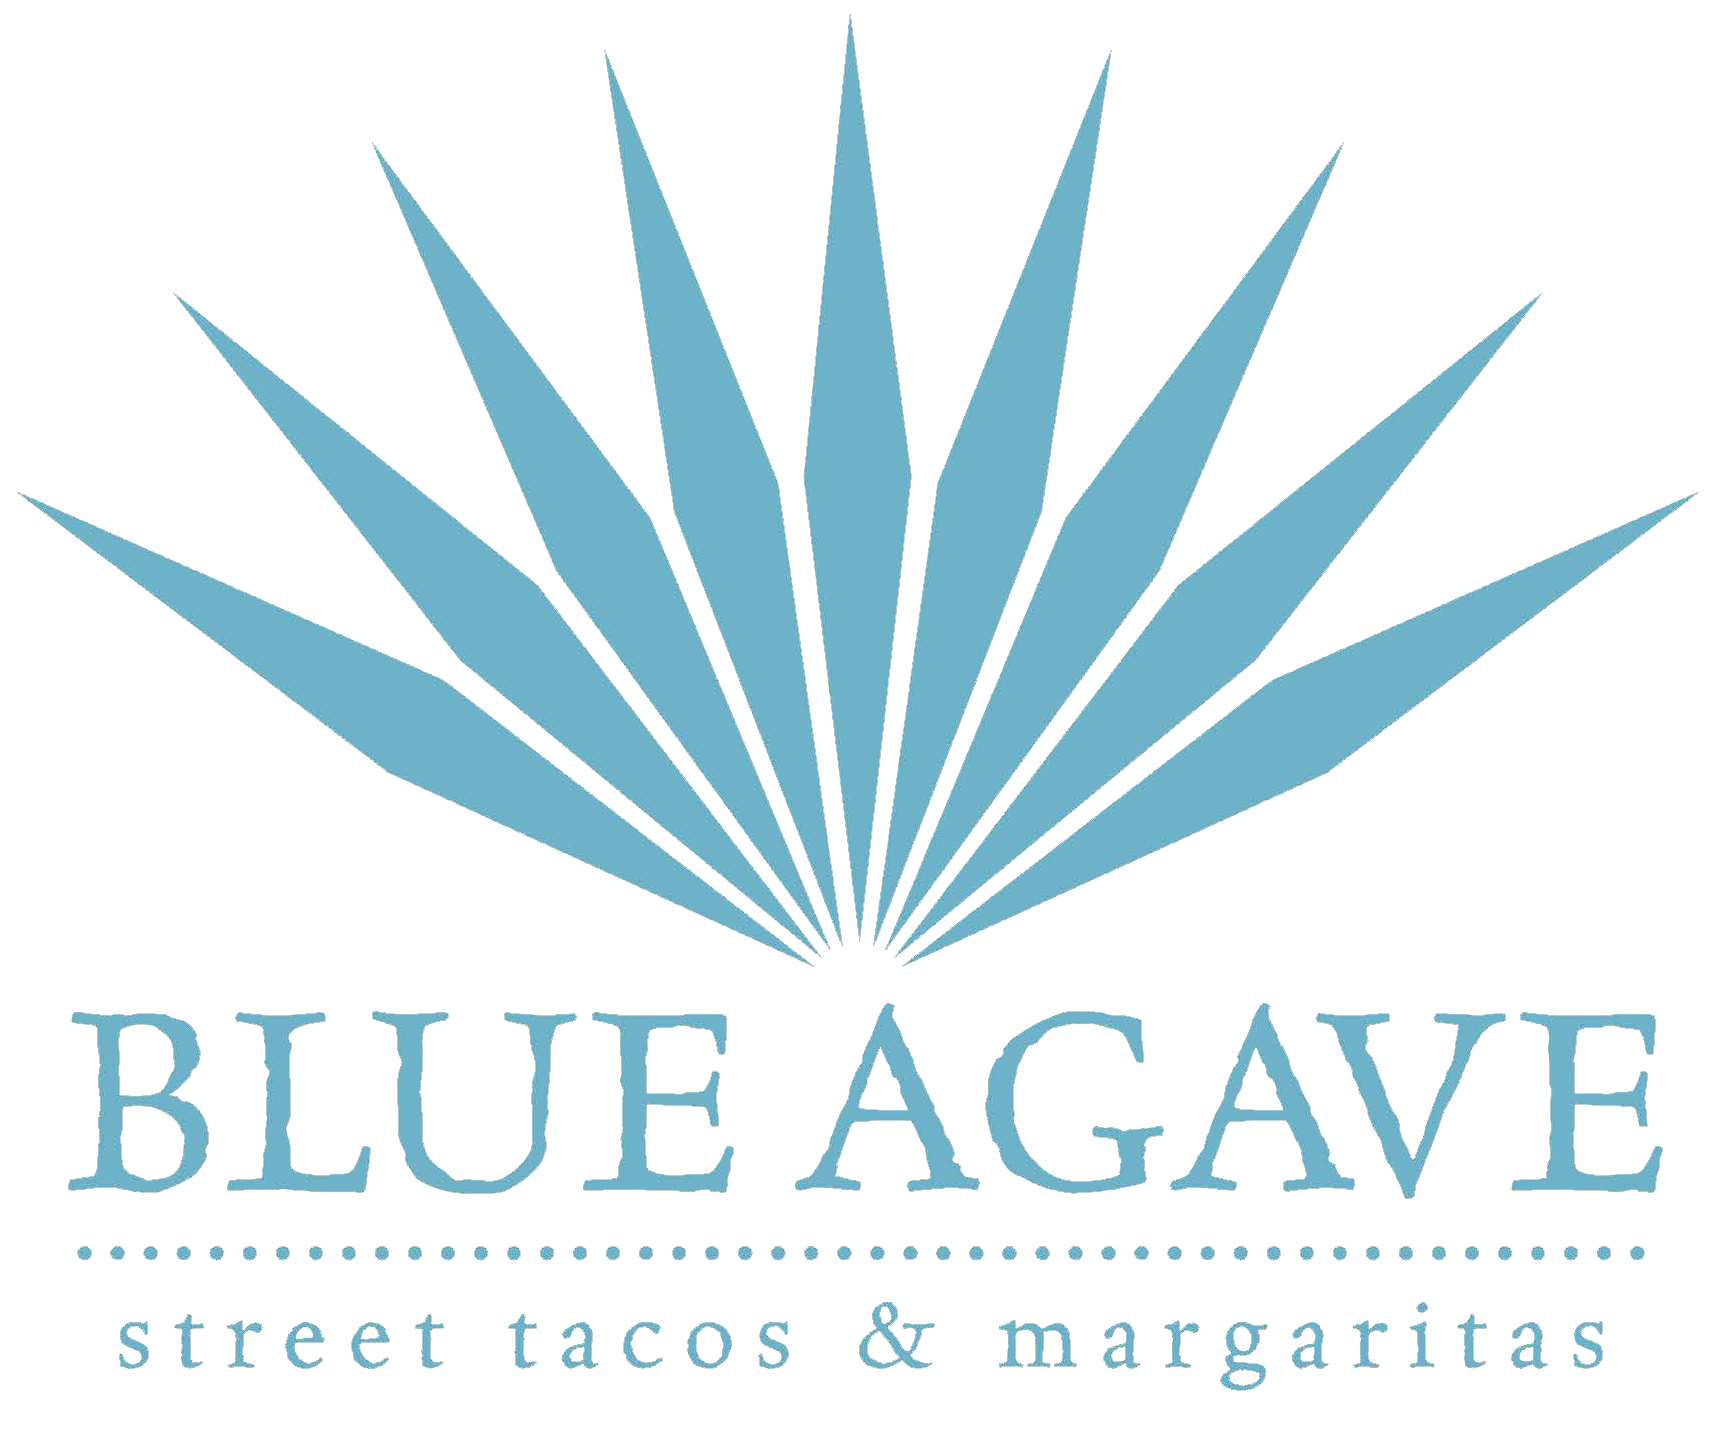 blue agave street tacos & margaritas